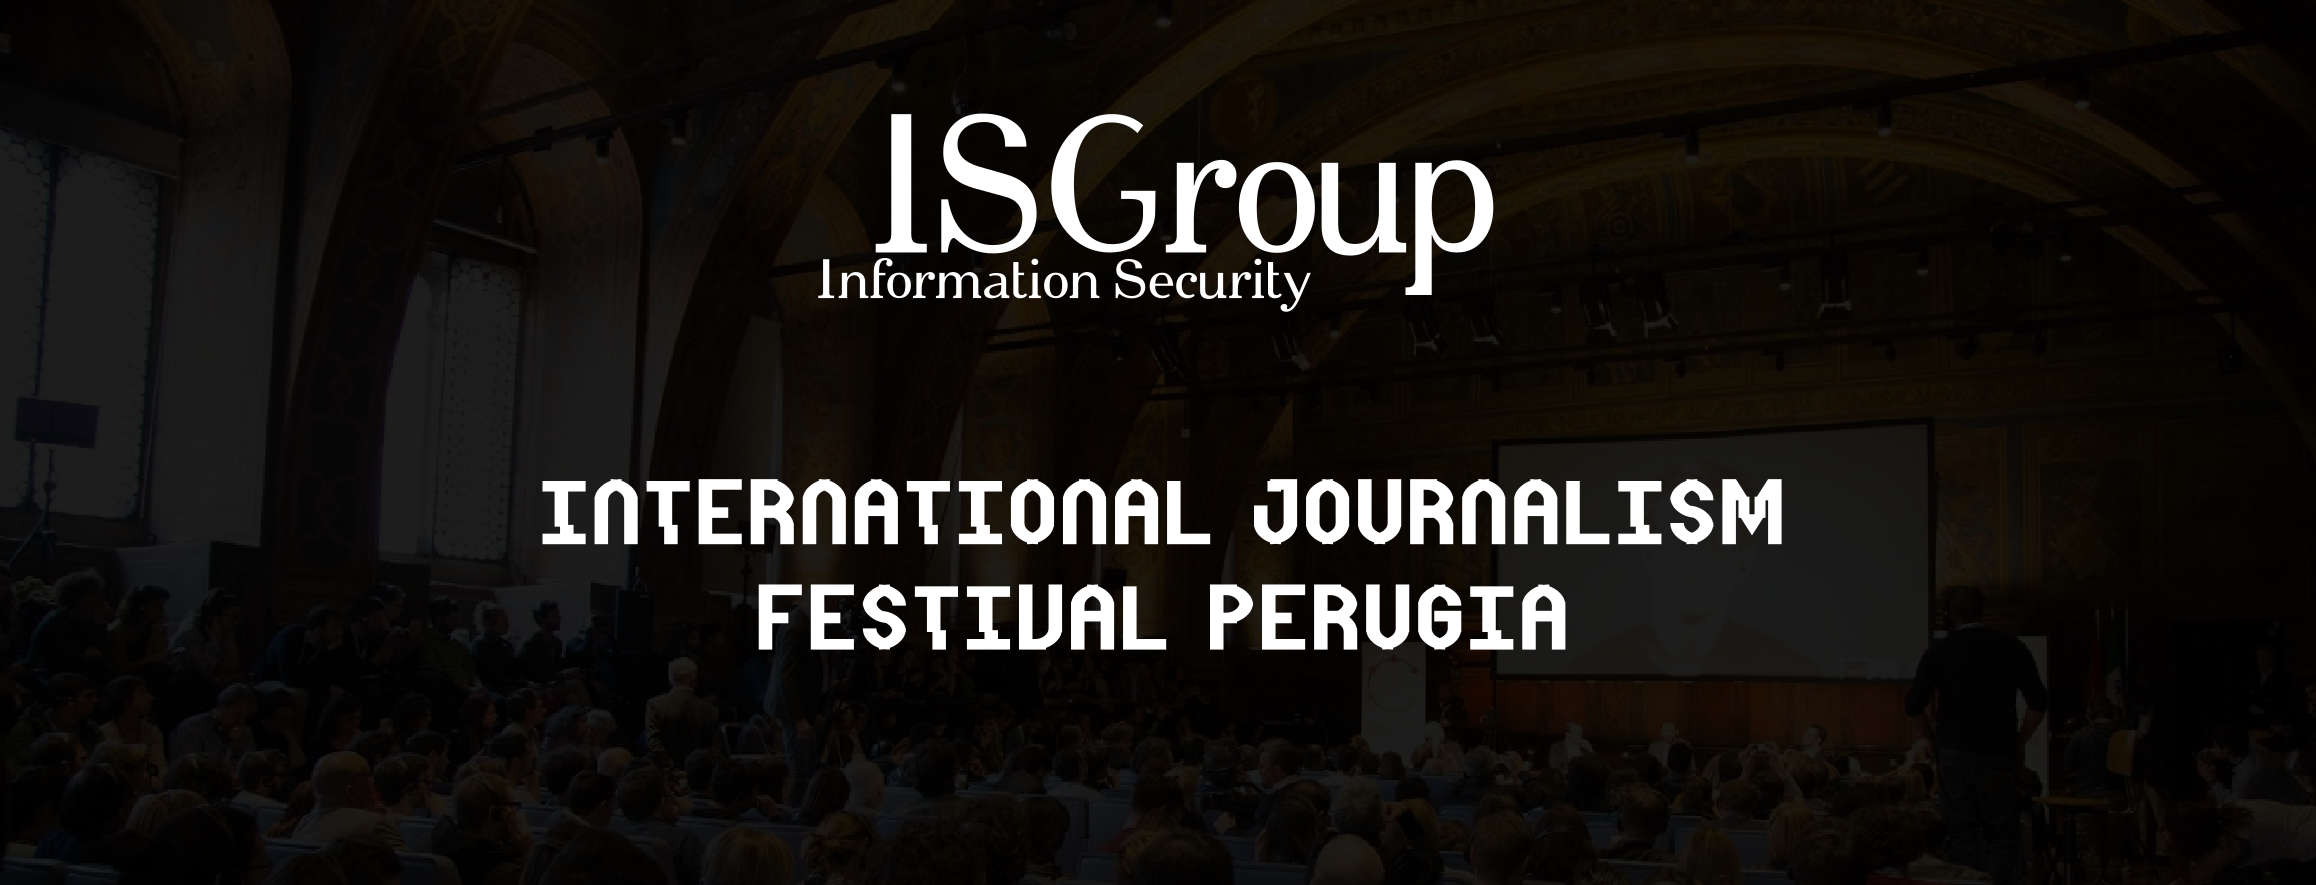 ISGroup SRL all'INTERNATIONAL JOURNALISM FESTIVAL intervento dal titolo: lost war